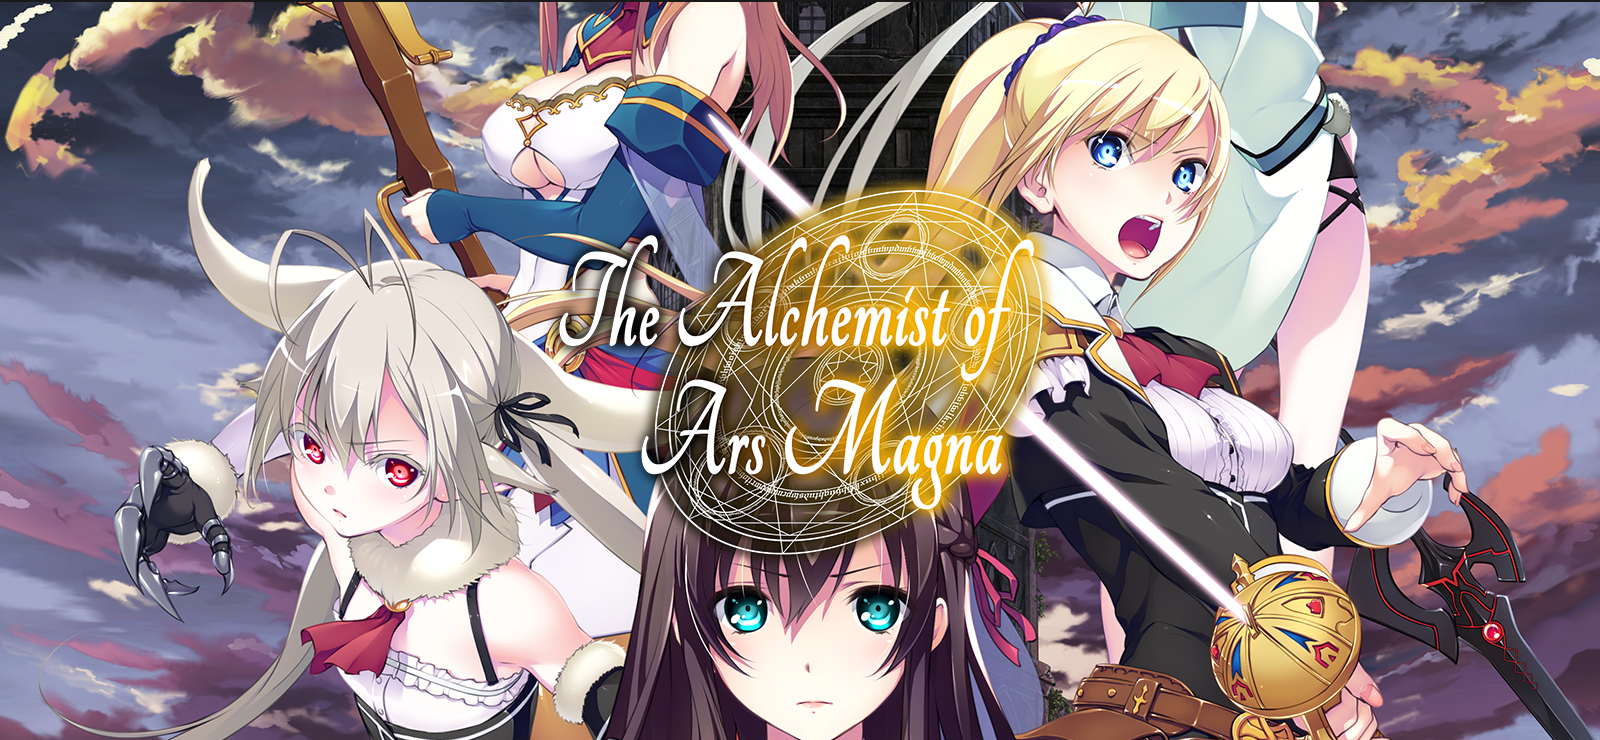 The Alchemist Of Ars Magna